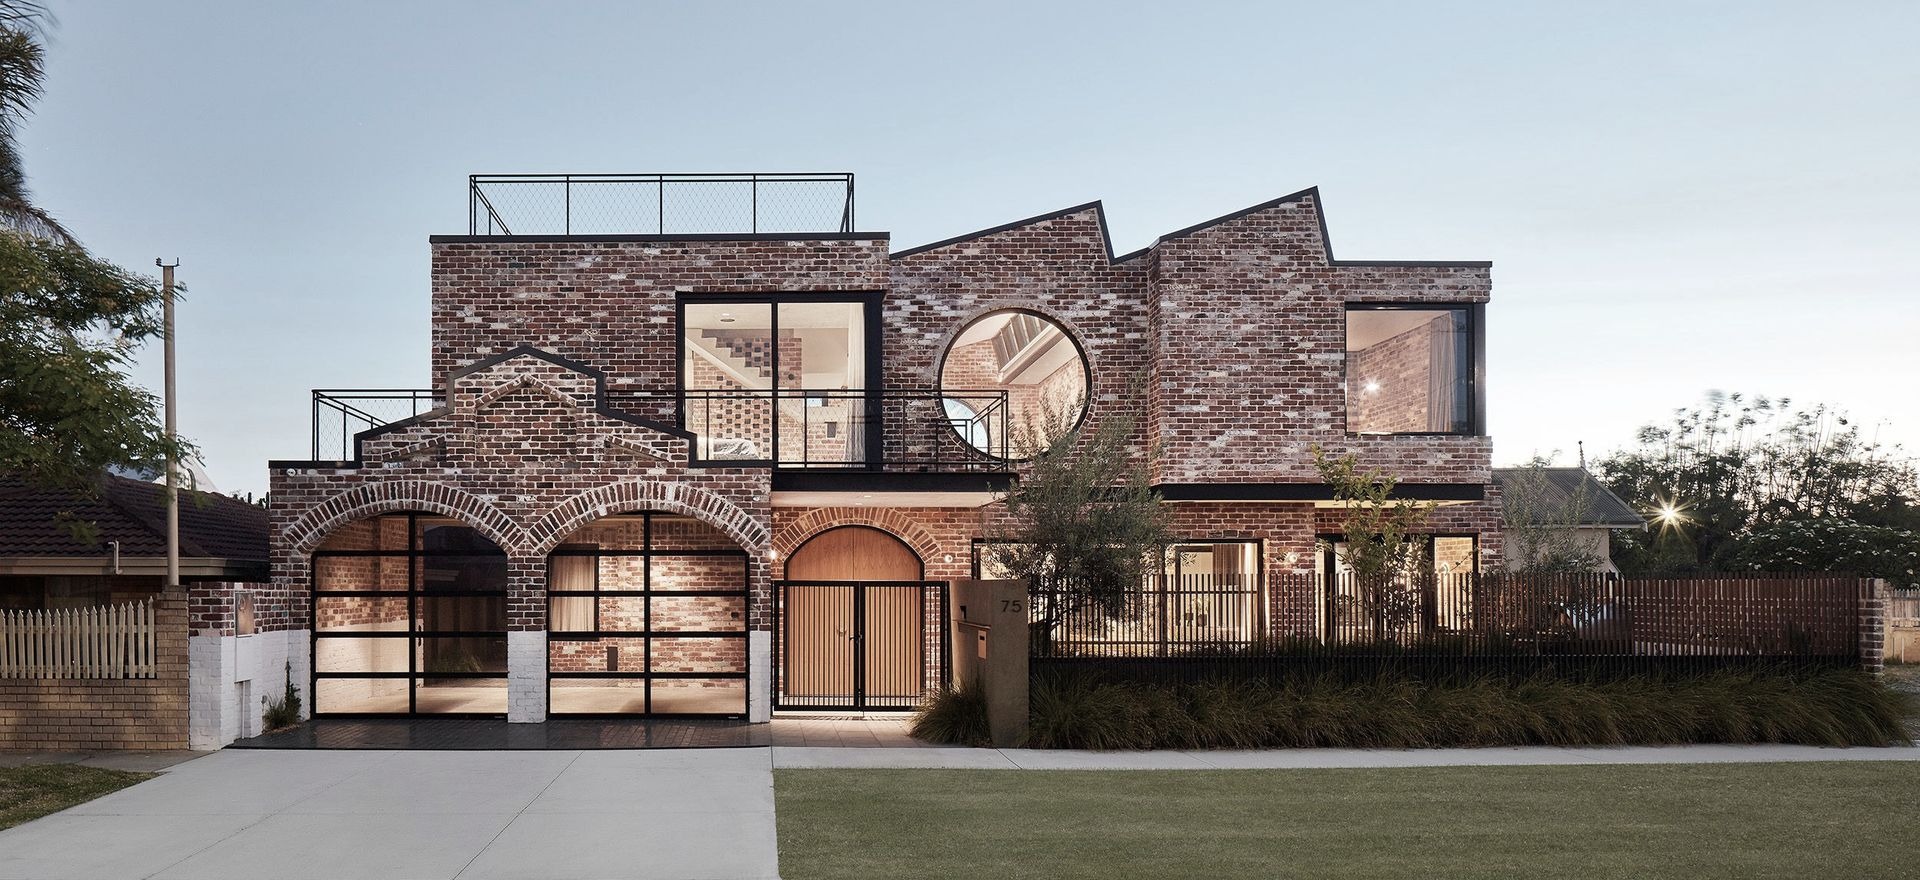 15 breathtaking brick houses in Australia to inspire you